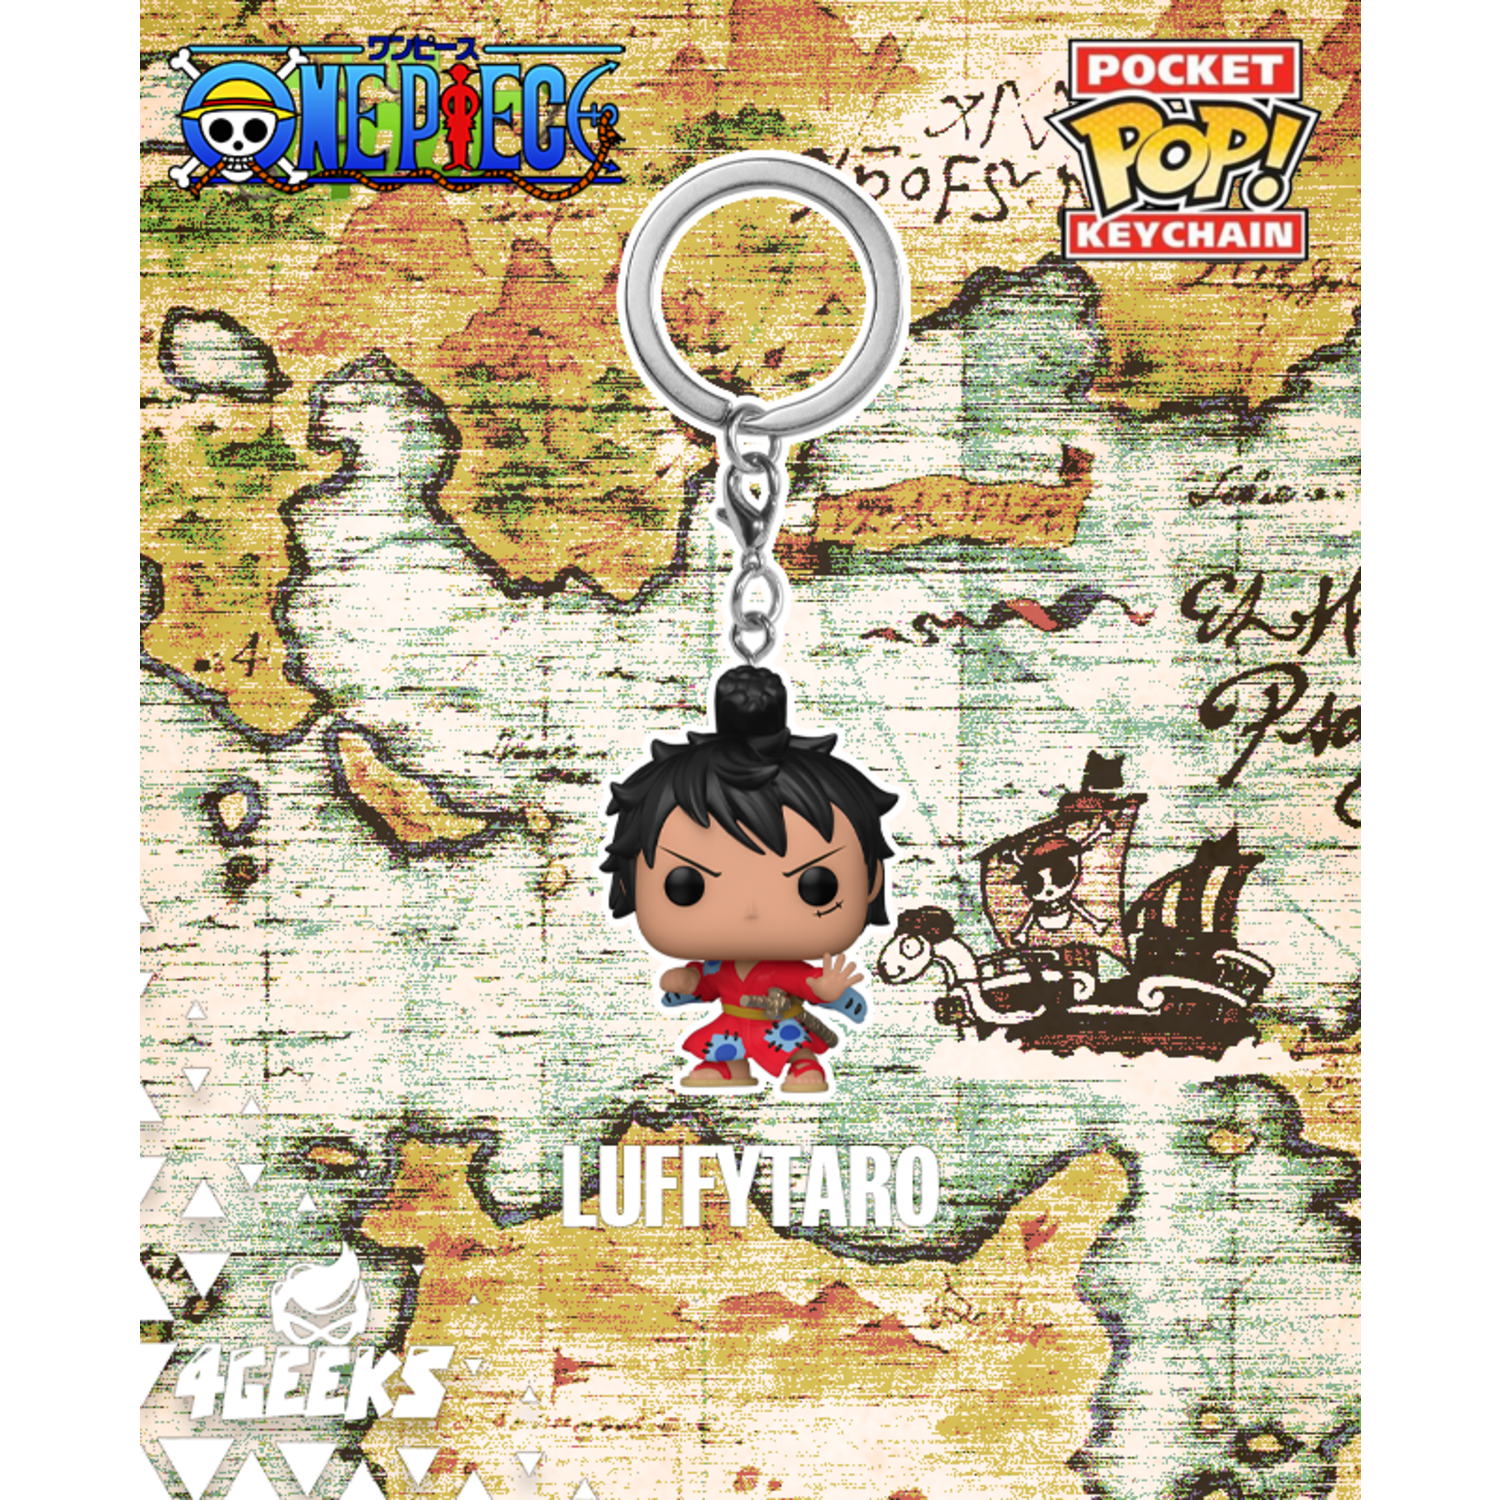 Funko Pop! Keychain: One Piece - Luffytaro